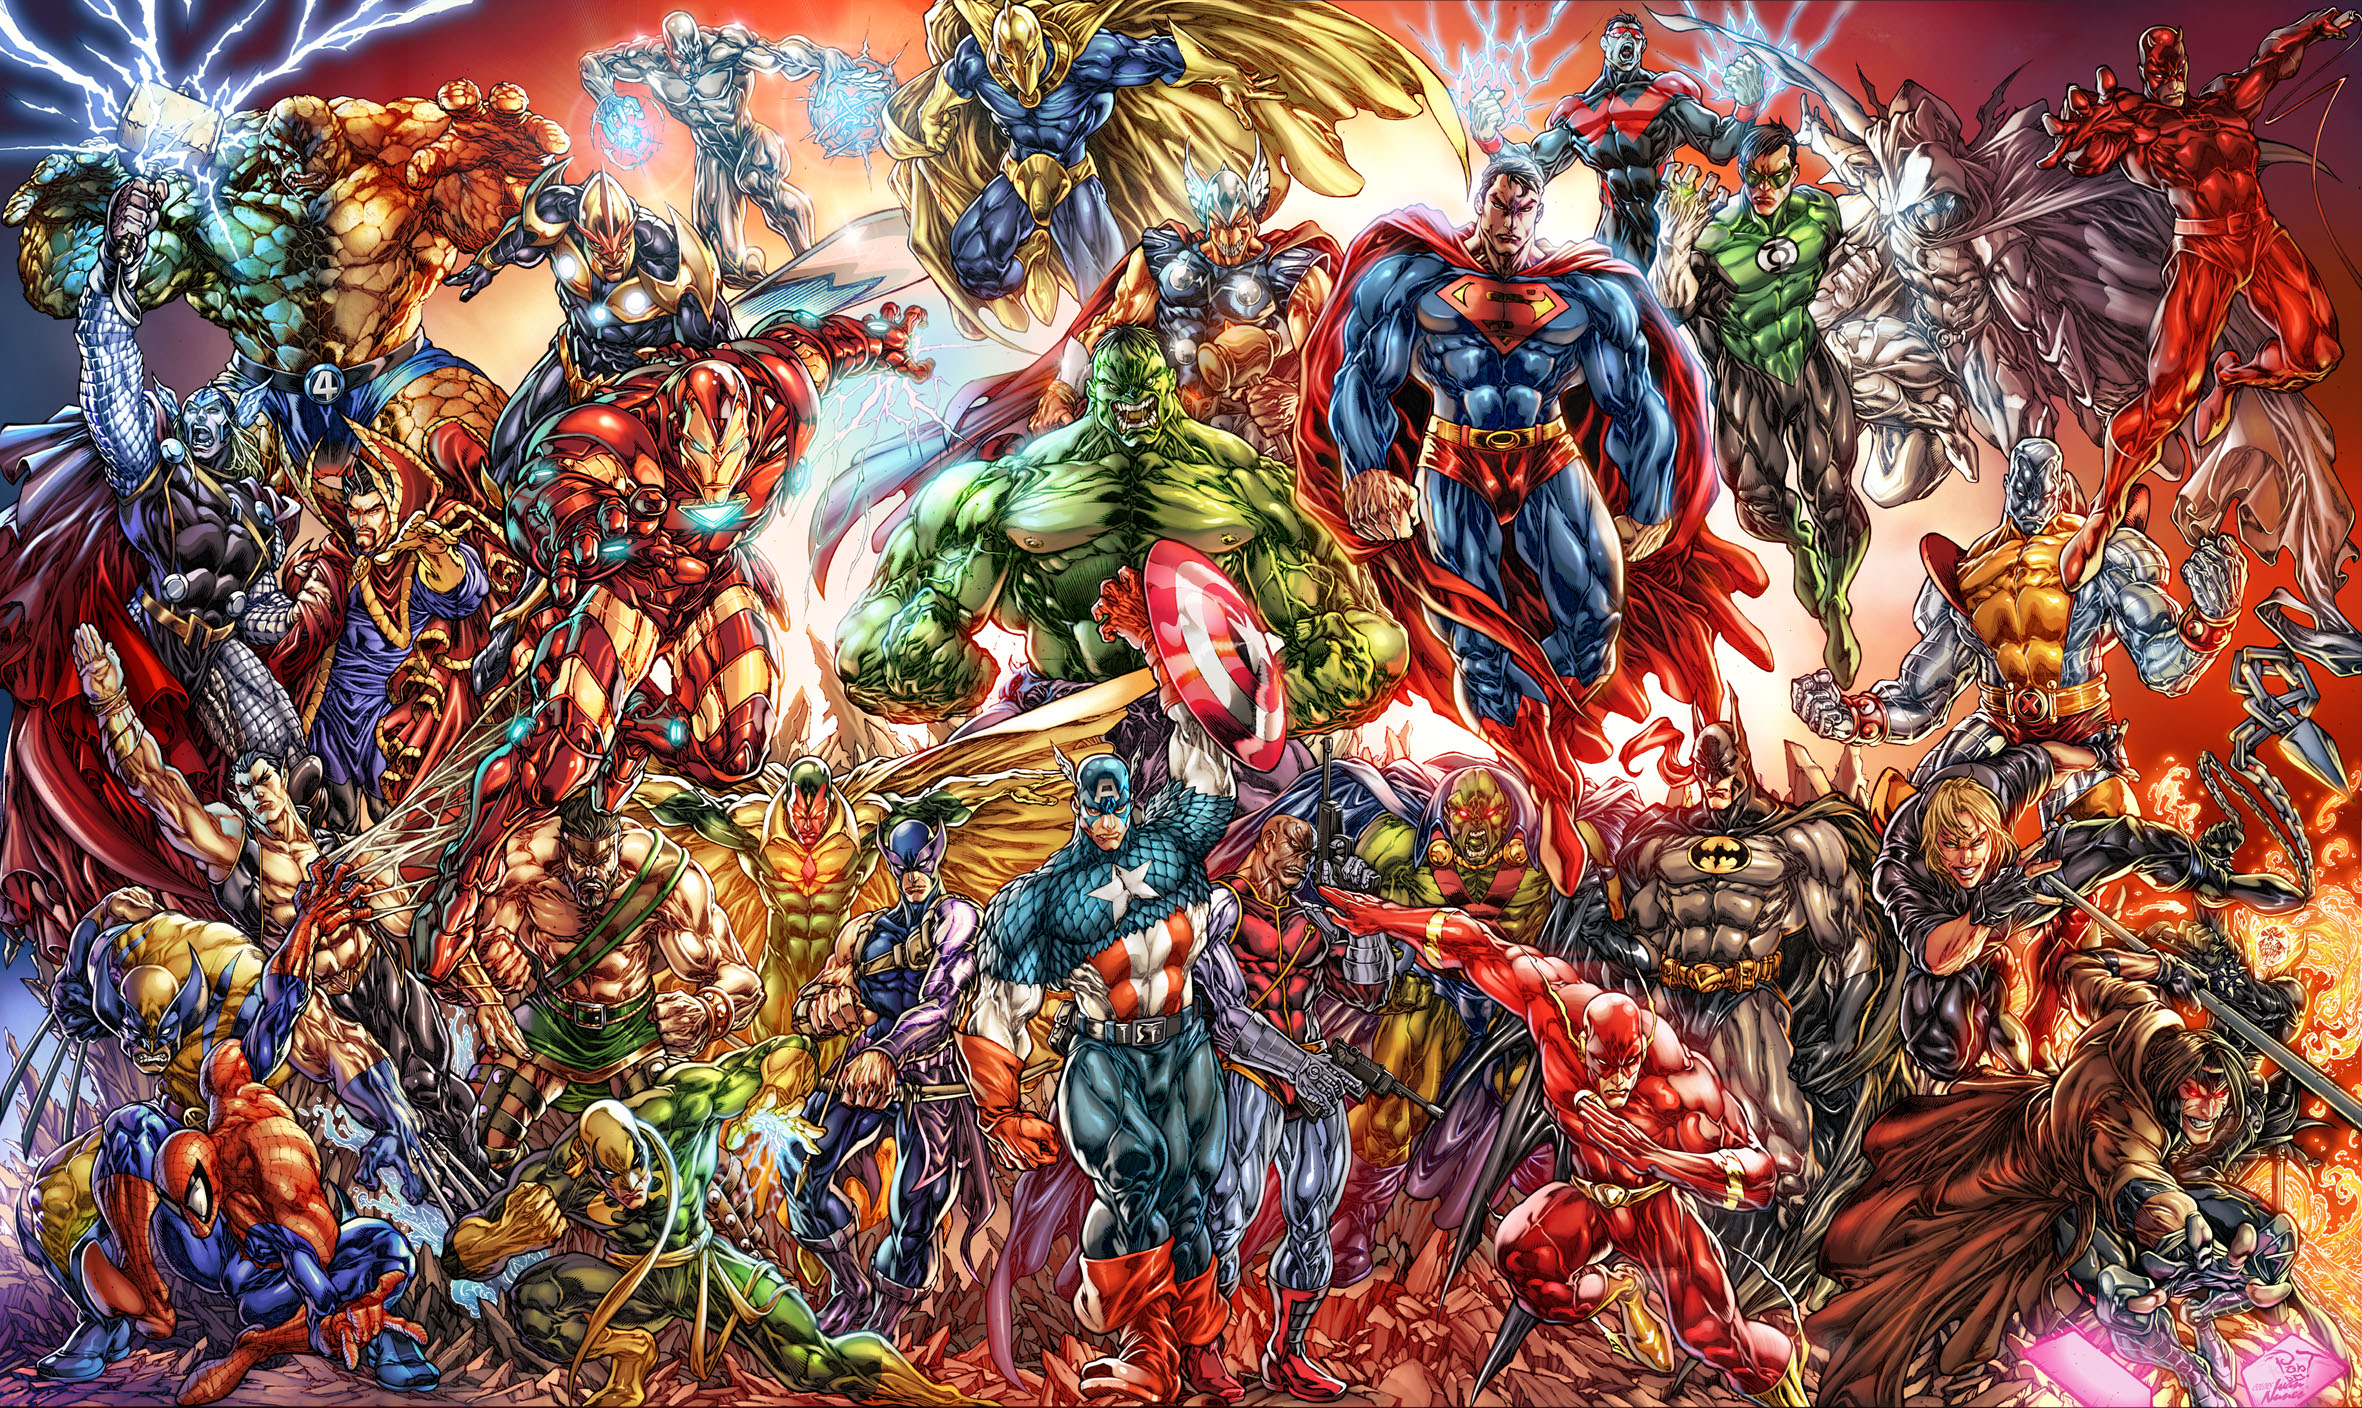 batman, superman, spider man, daredevil, ghost rider, iron man, dc comics, thor, hal jordan, martian manhunter, hulk, comics, collage, barry allen, wolverine, ben grimm, beta ray bill, captain america, clint barton, colossus, danny rand, deathlok, doctor fate (dc comics), doctor strange, flash, gambit (marvel comics), green lantern, hawkeye, hercules (marvel comics), iron fist (marvel comics), j'onn j'onzz, longshot (marvel comics), moon knight, namor the sub mariner, nightwing, nova (marvel comics), peter parker, silver surfer, sub mariner, thing (marvel comics), vision (marvel comics), wonder man QHD